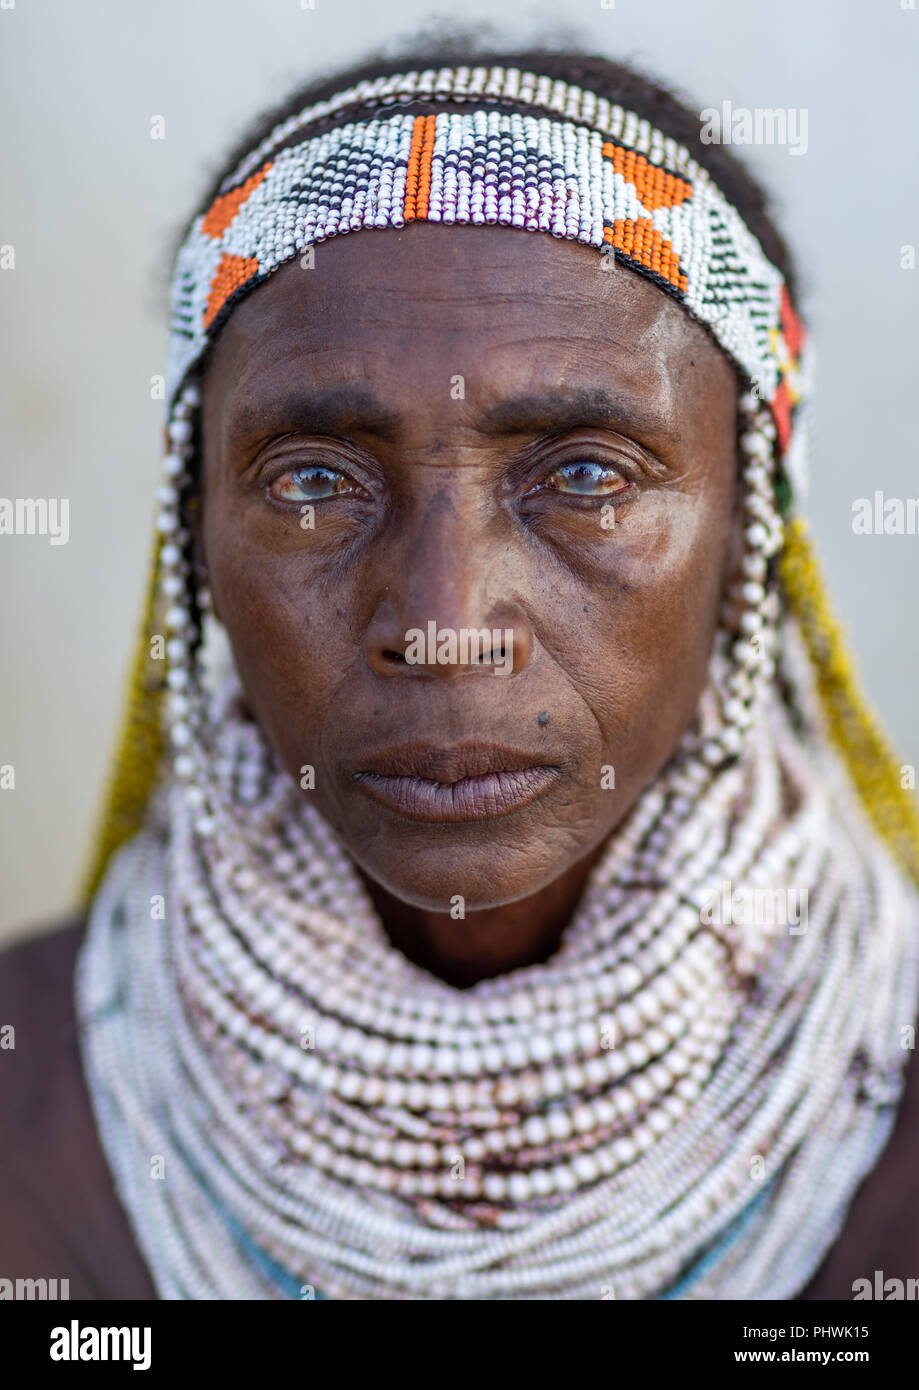 Handa tribe woman with huge beaded necklaces, Huila Province, Hoque, Angola Stock Photo